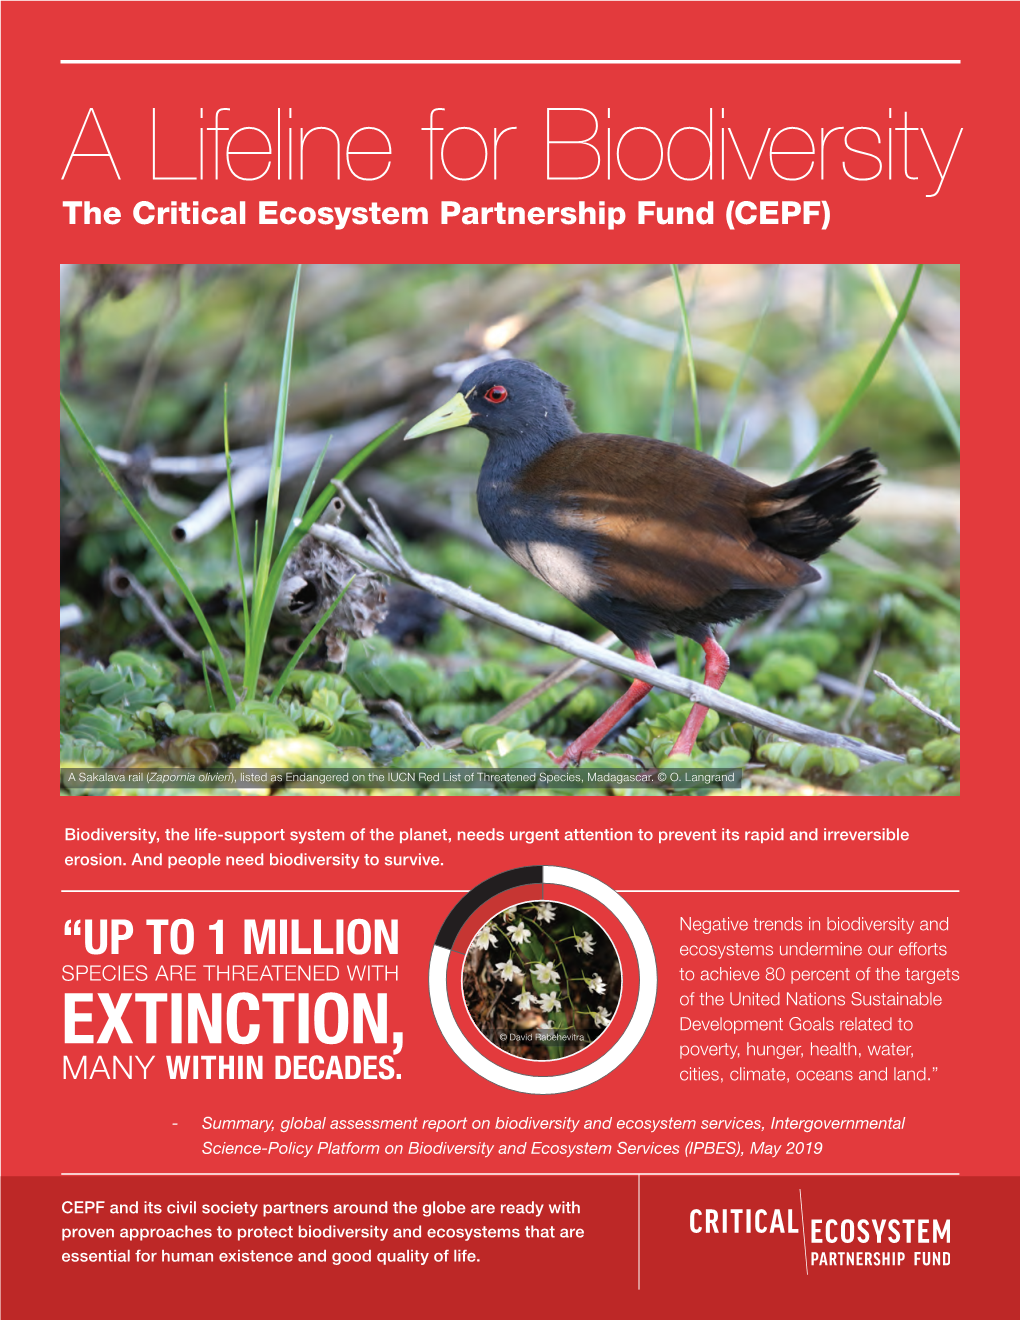 Lifeline for Biodiversity the Critical Ecosystem Partnership Fund (CEPF)